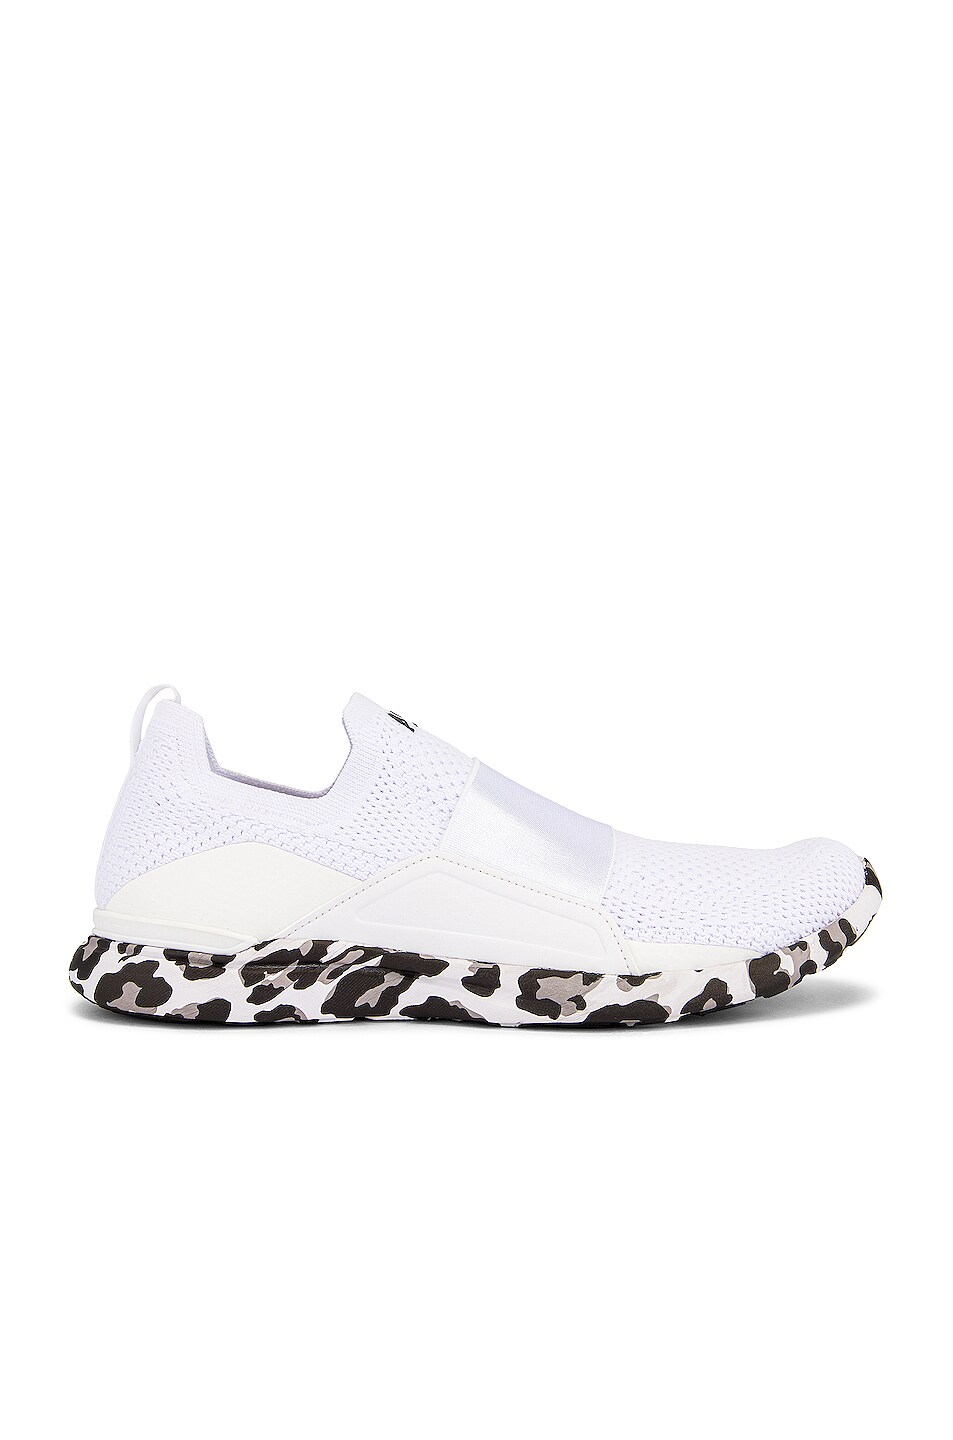 Image 1 of APL: Athletic Propulsion Labs TechLoom Bliss Sneaker in White, Black, & Leopard